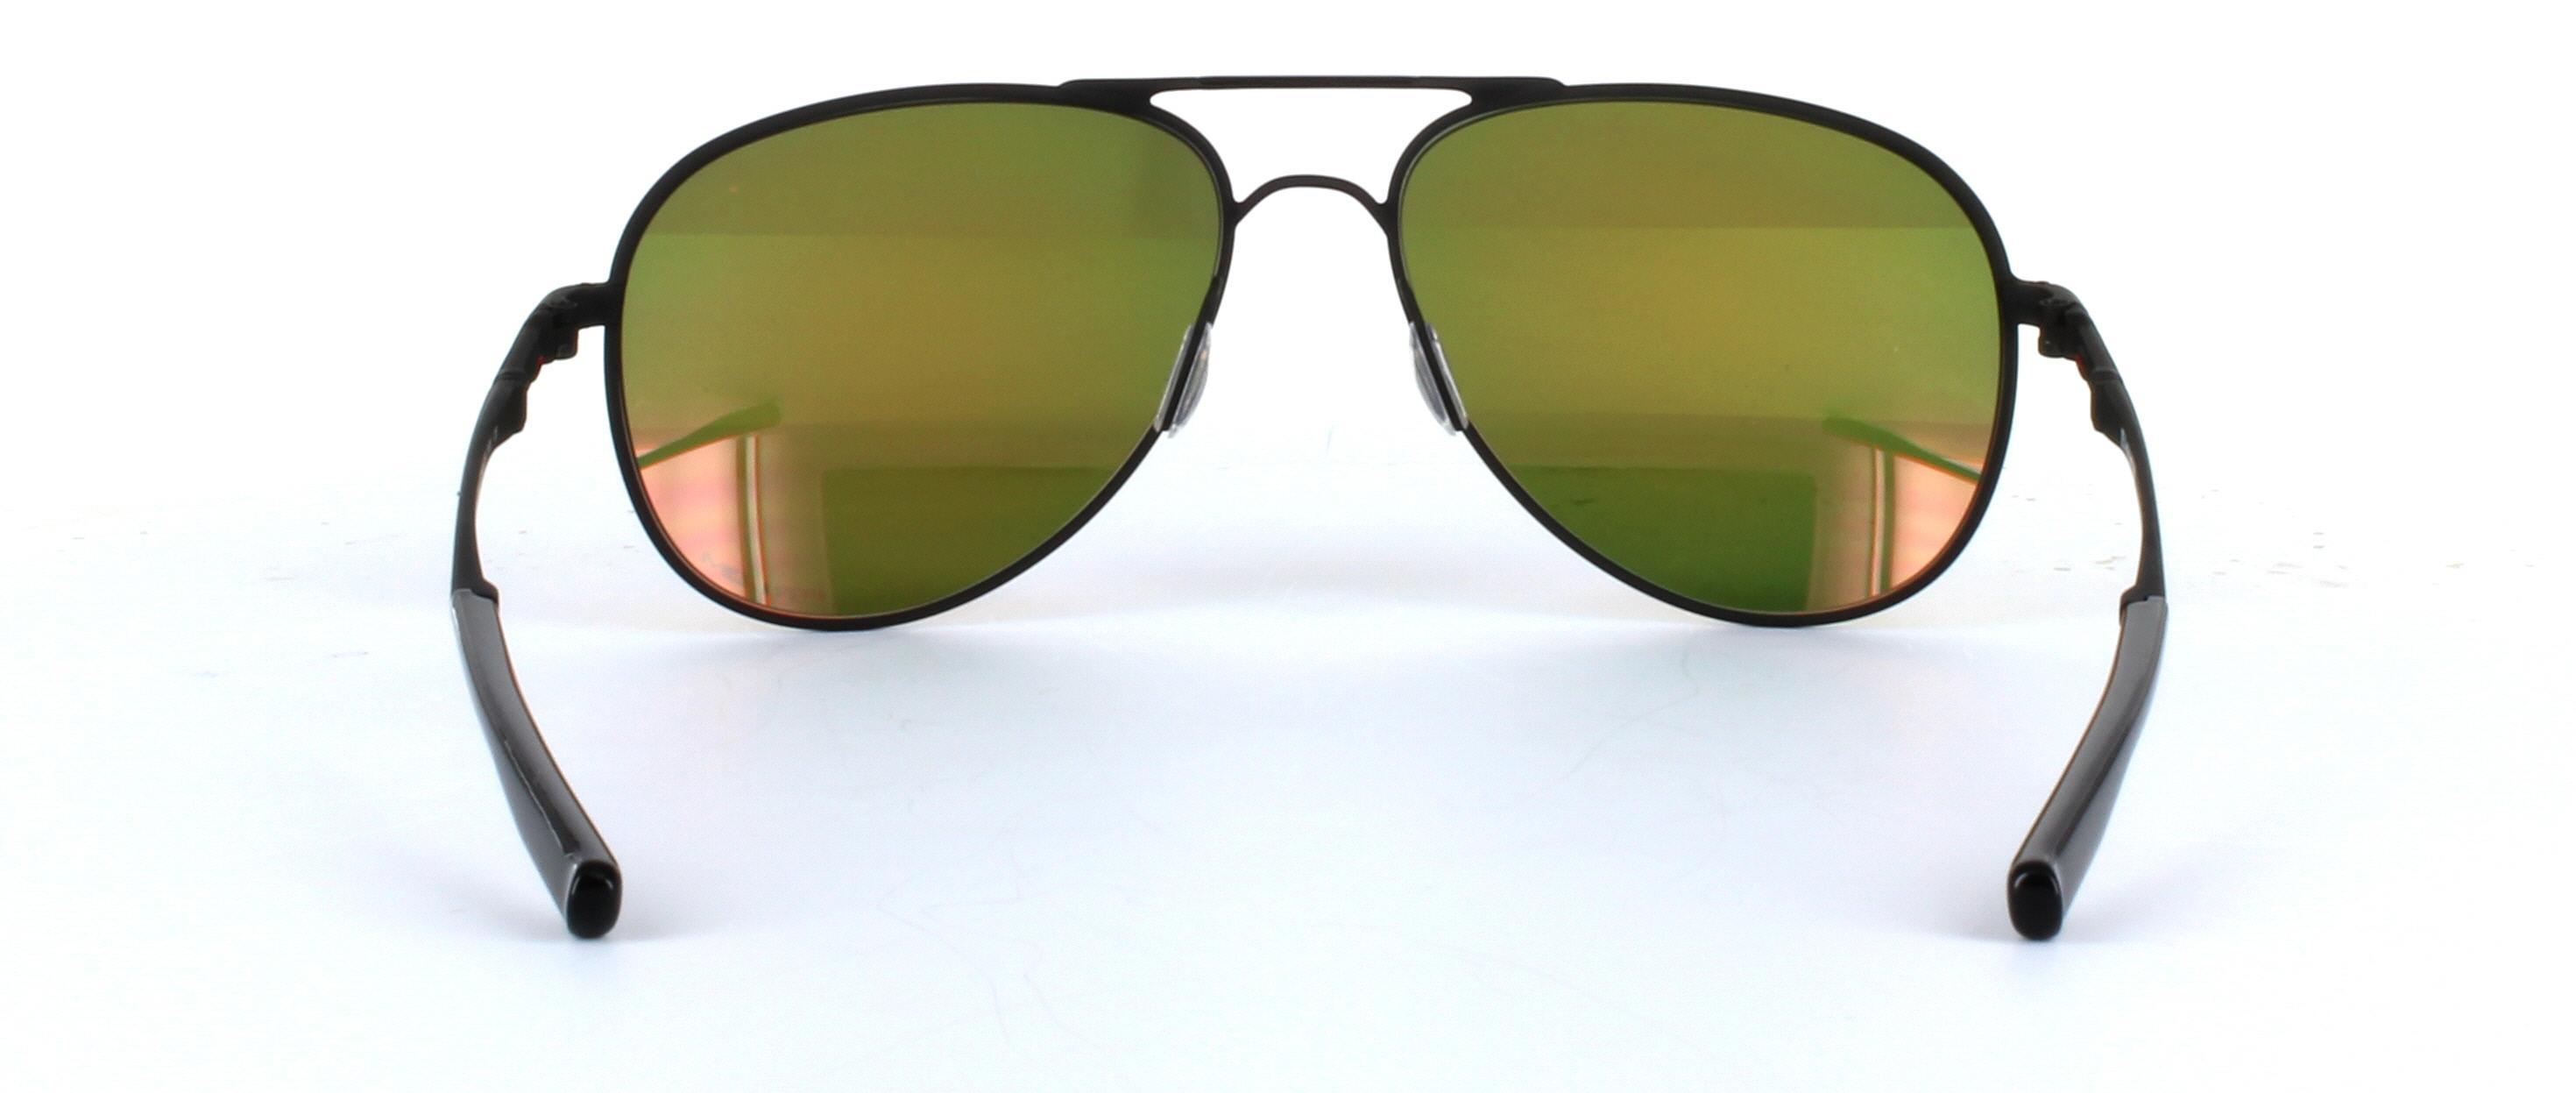 Oakley Elmont Black Full Rim Aviator Metal Sunglasses - Image View 3